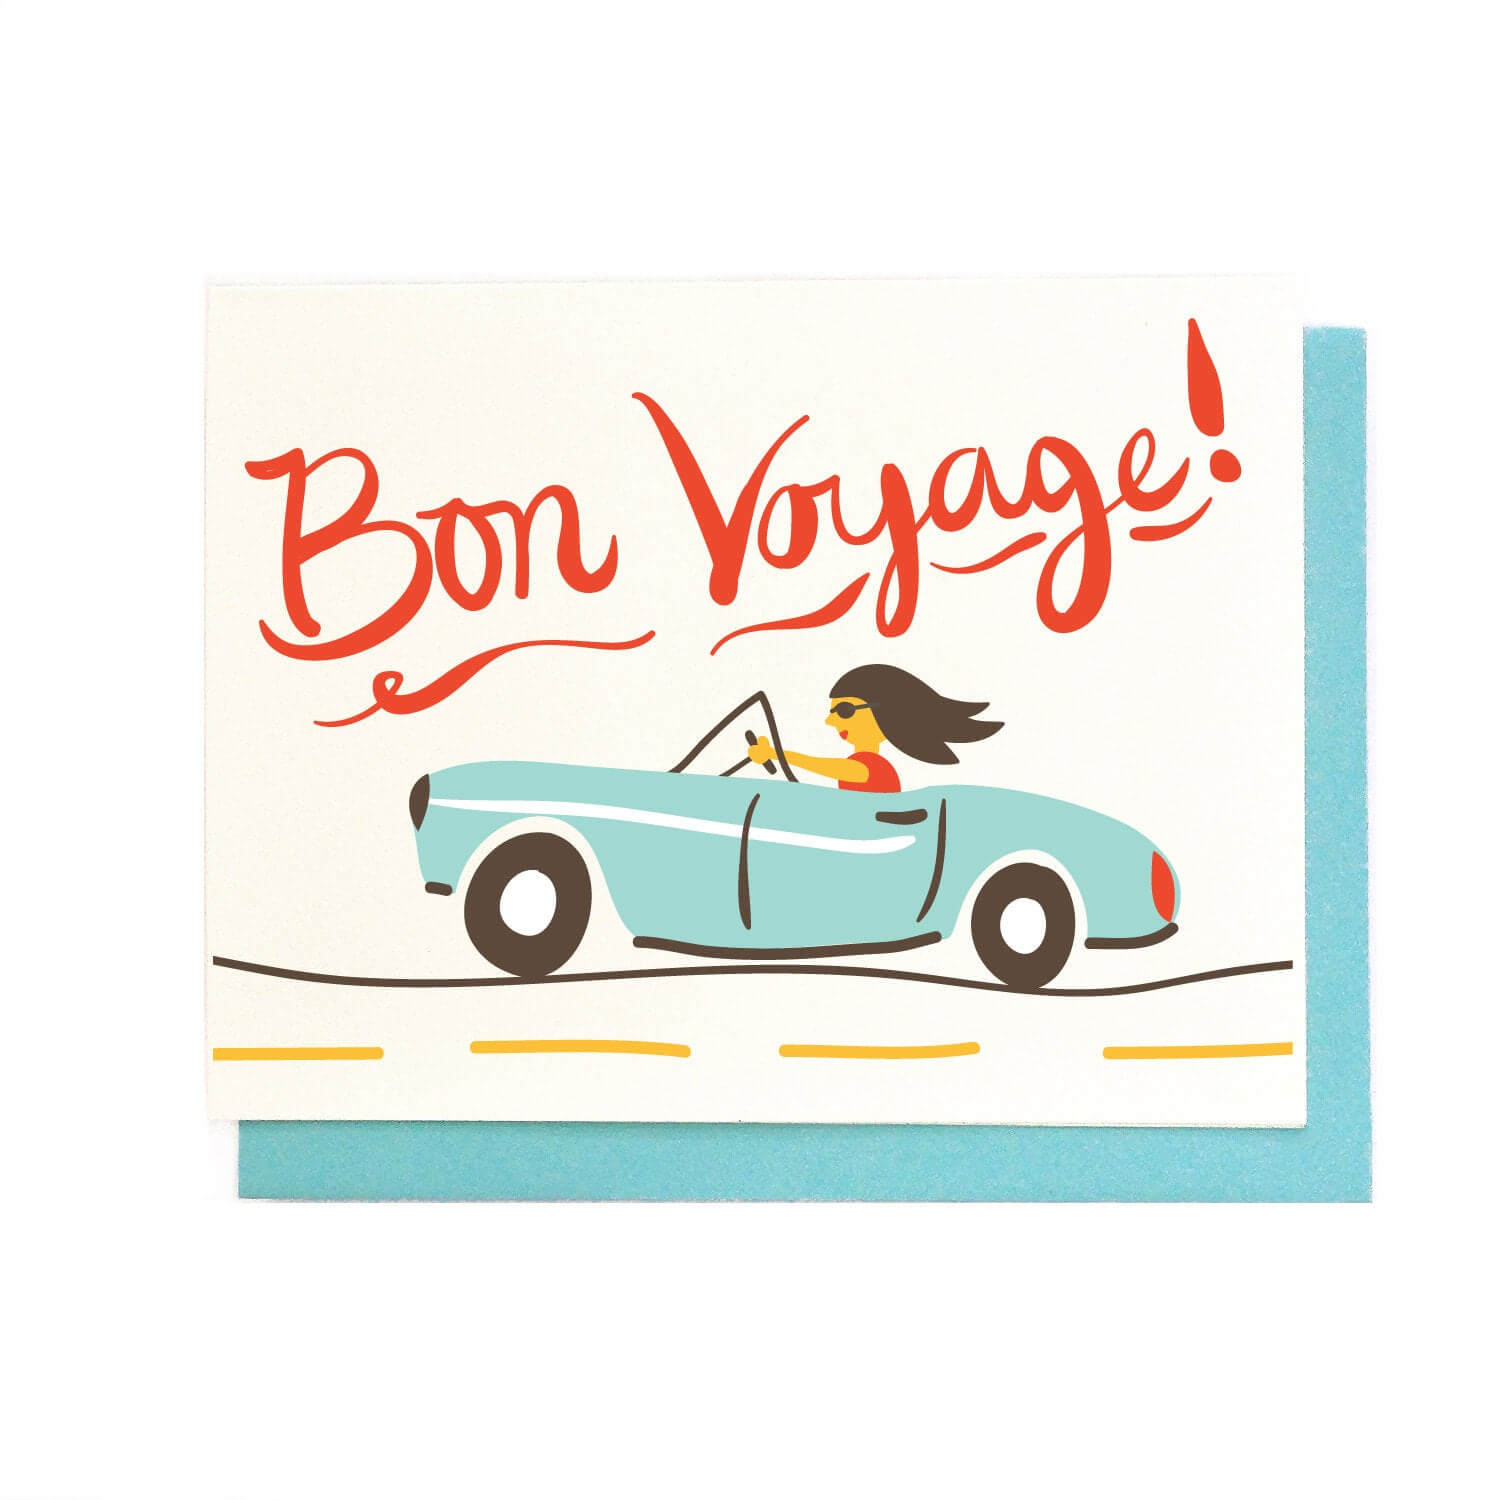 28+ [ Bon Voyage Card Template ] | Elizabeth Allan S Art Inside Bon Voyage Card Template